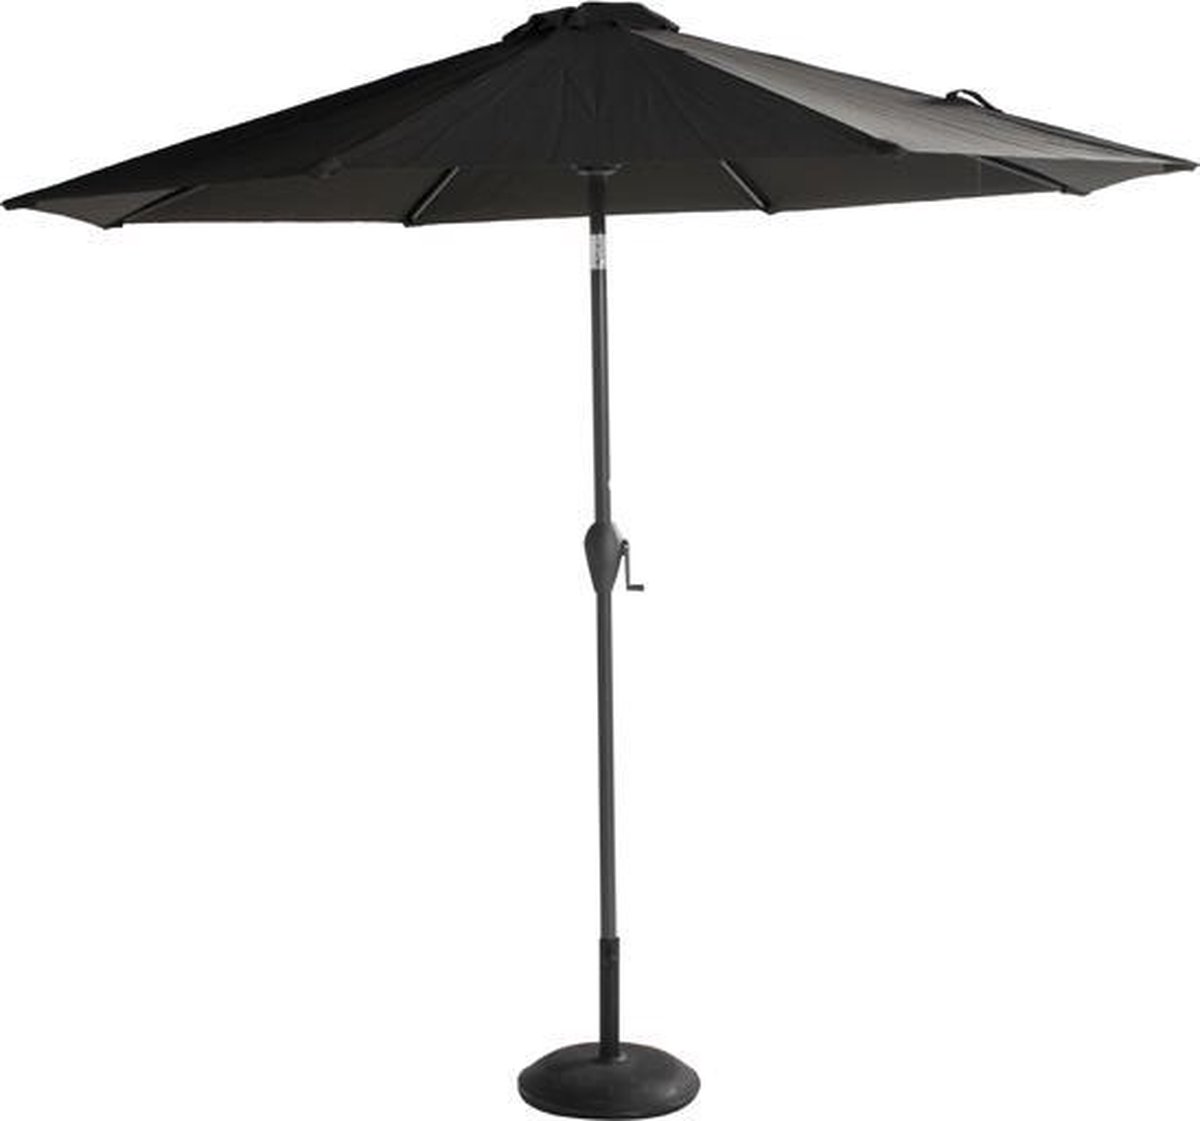 Hartman sunline parasol 270cm royal grey.